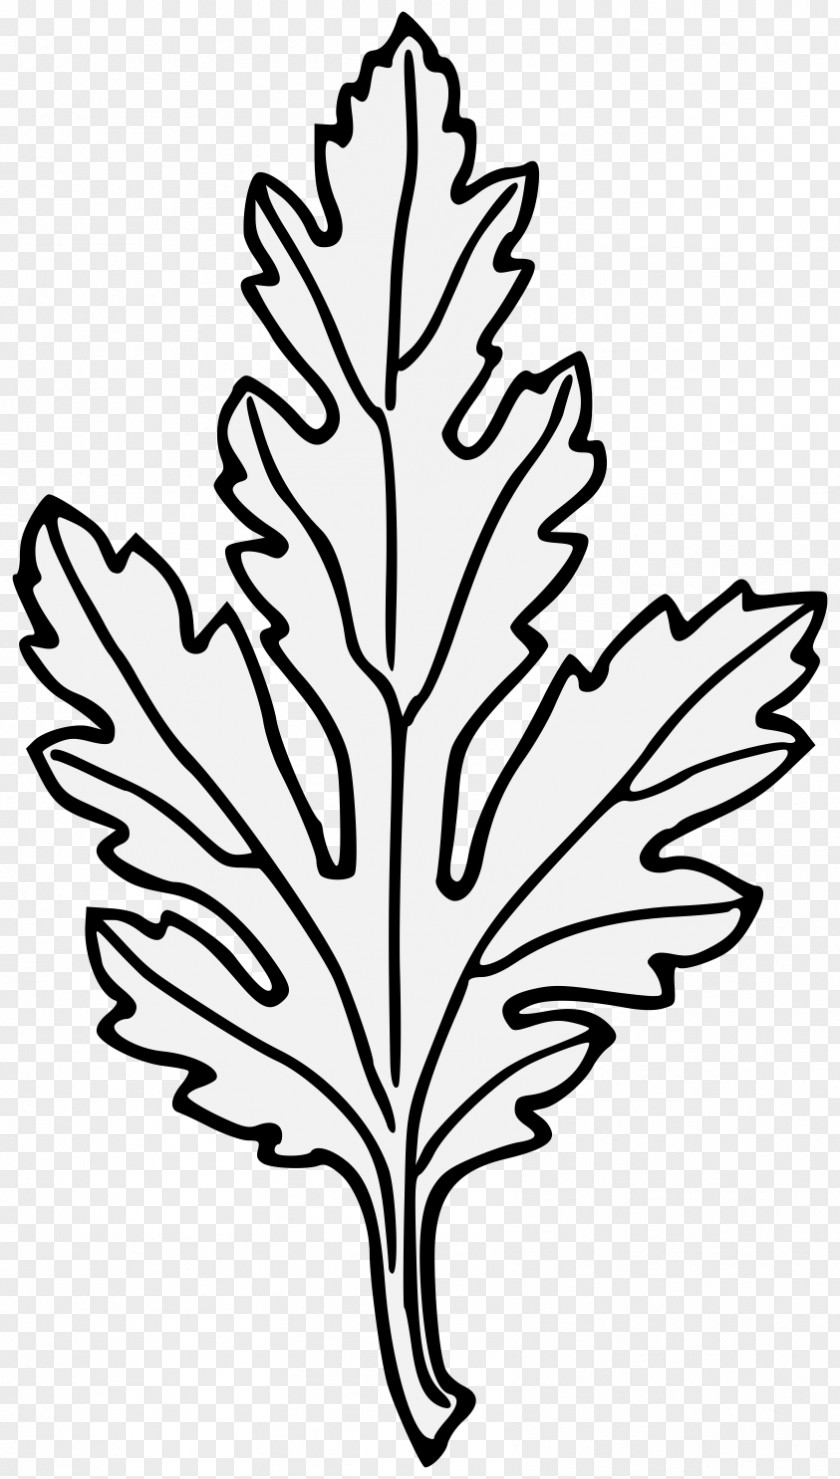 Chrysanthemum Border Clip Art Drawing Line Image Illustration PNG